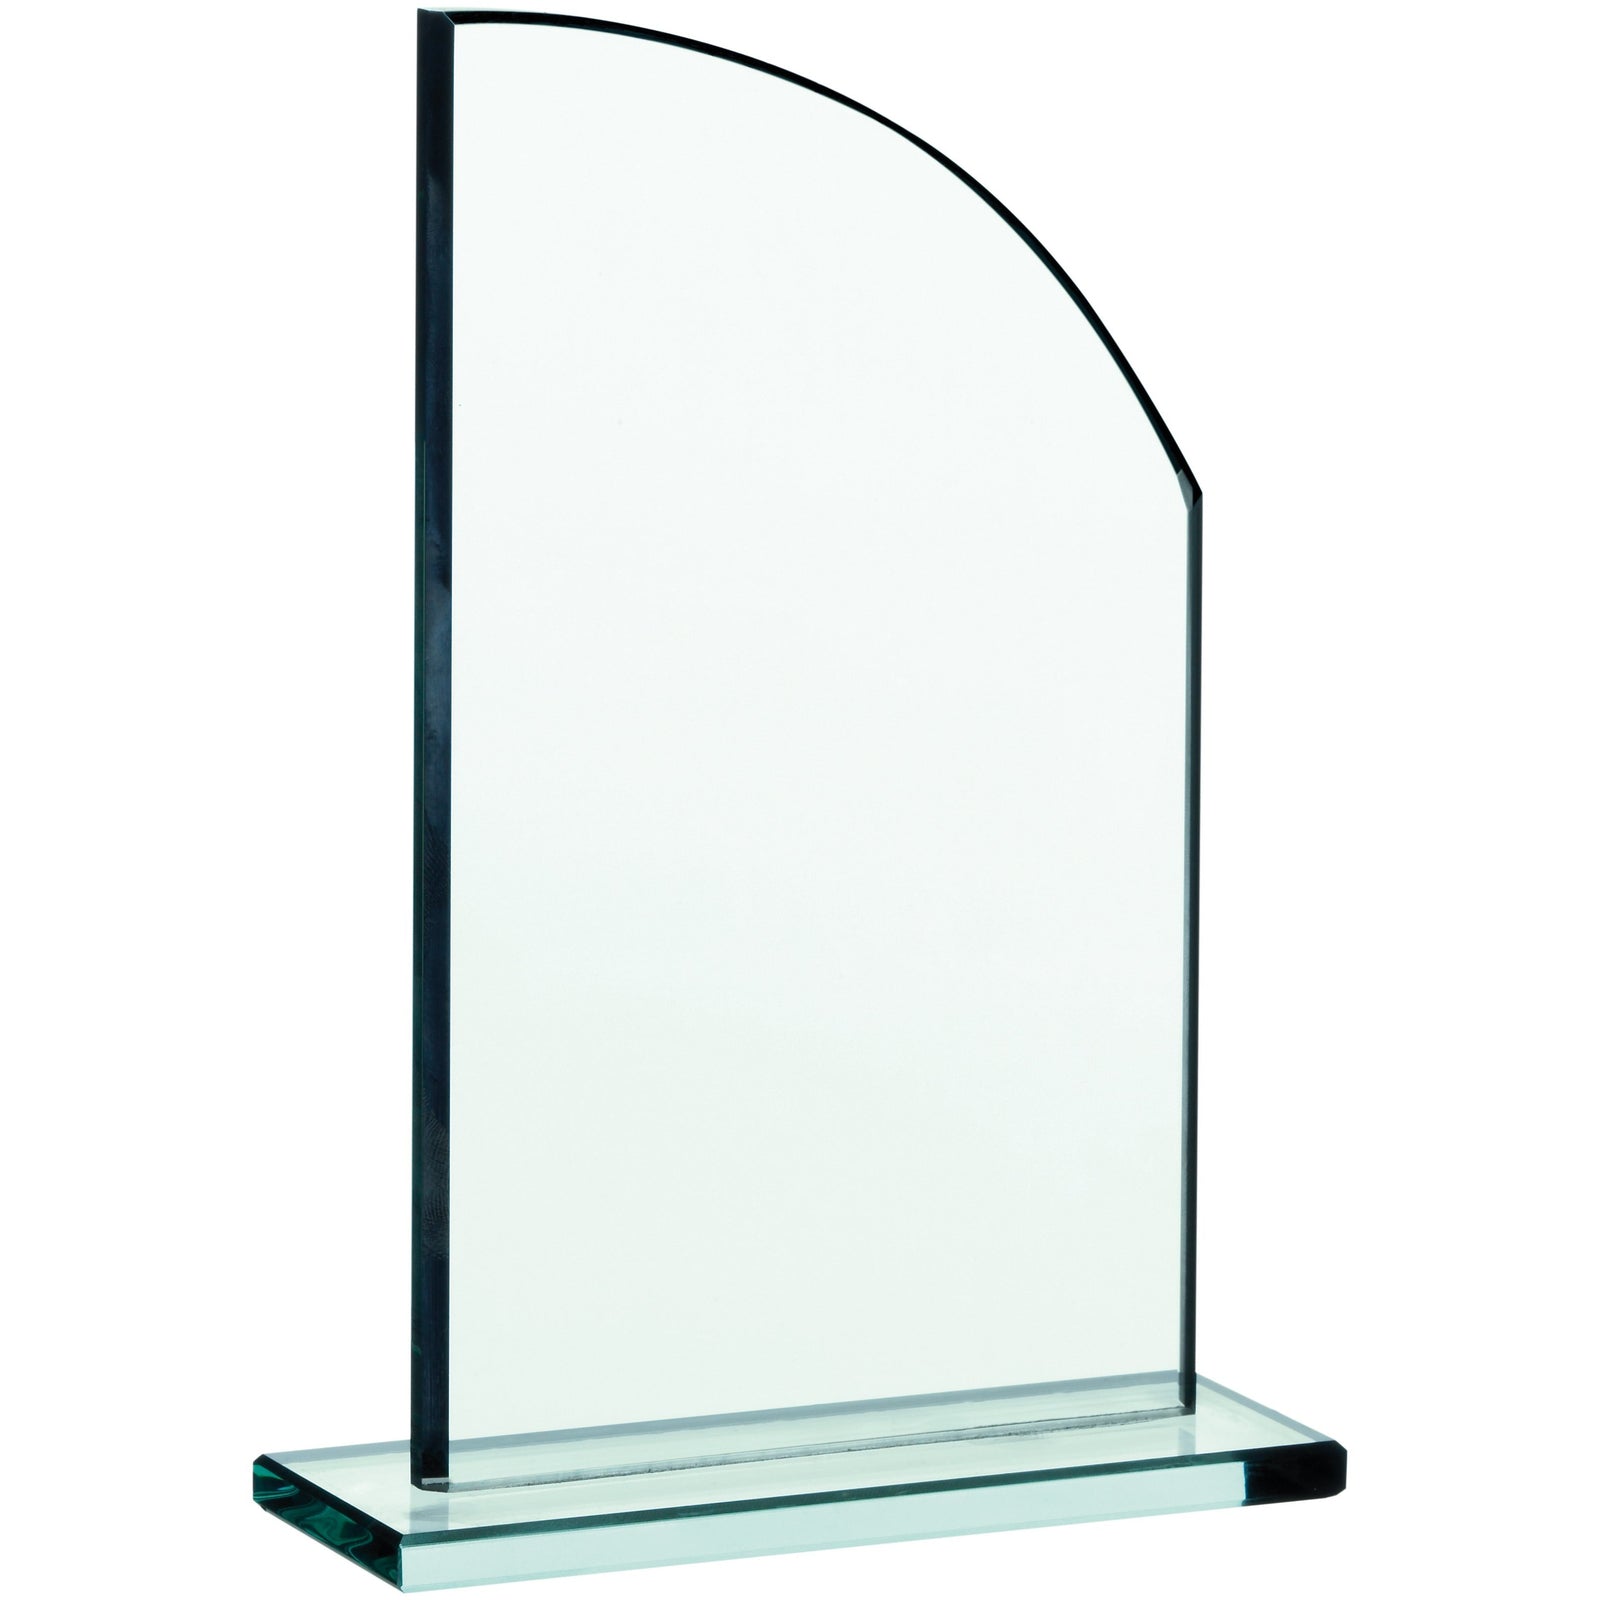 Jade Glass Fin Plaque Award (CLEARANCE)